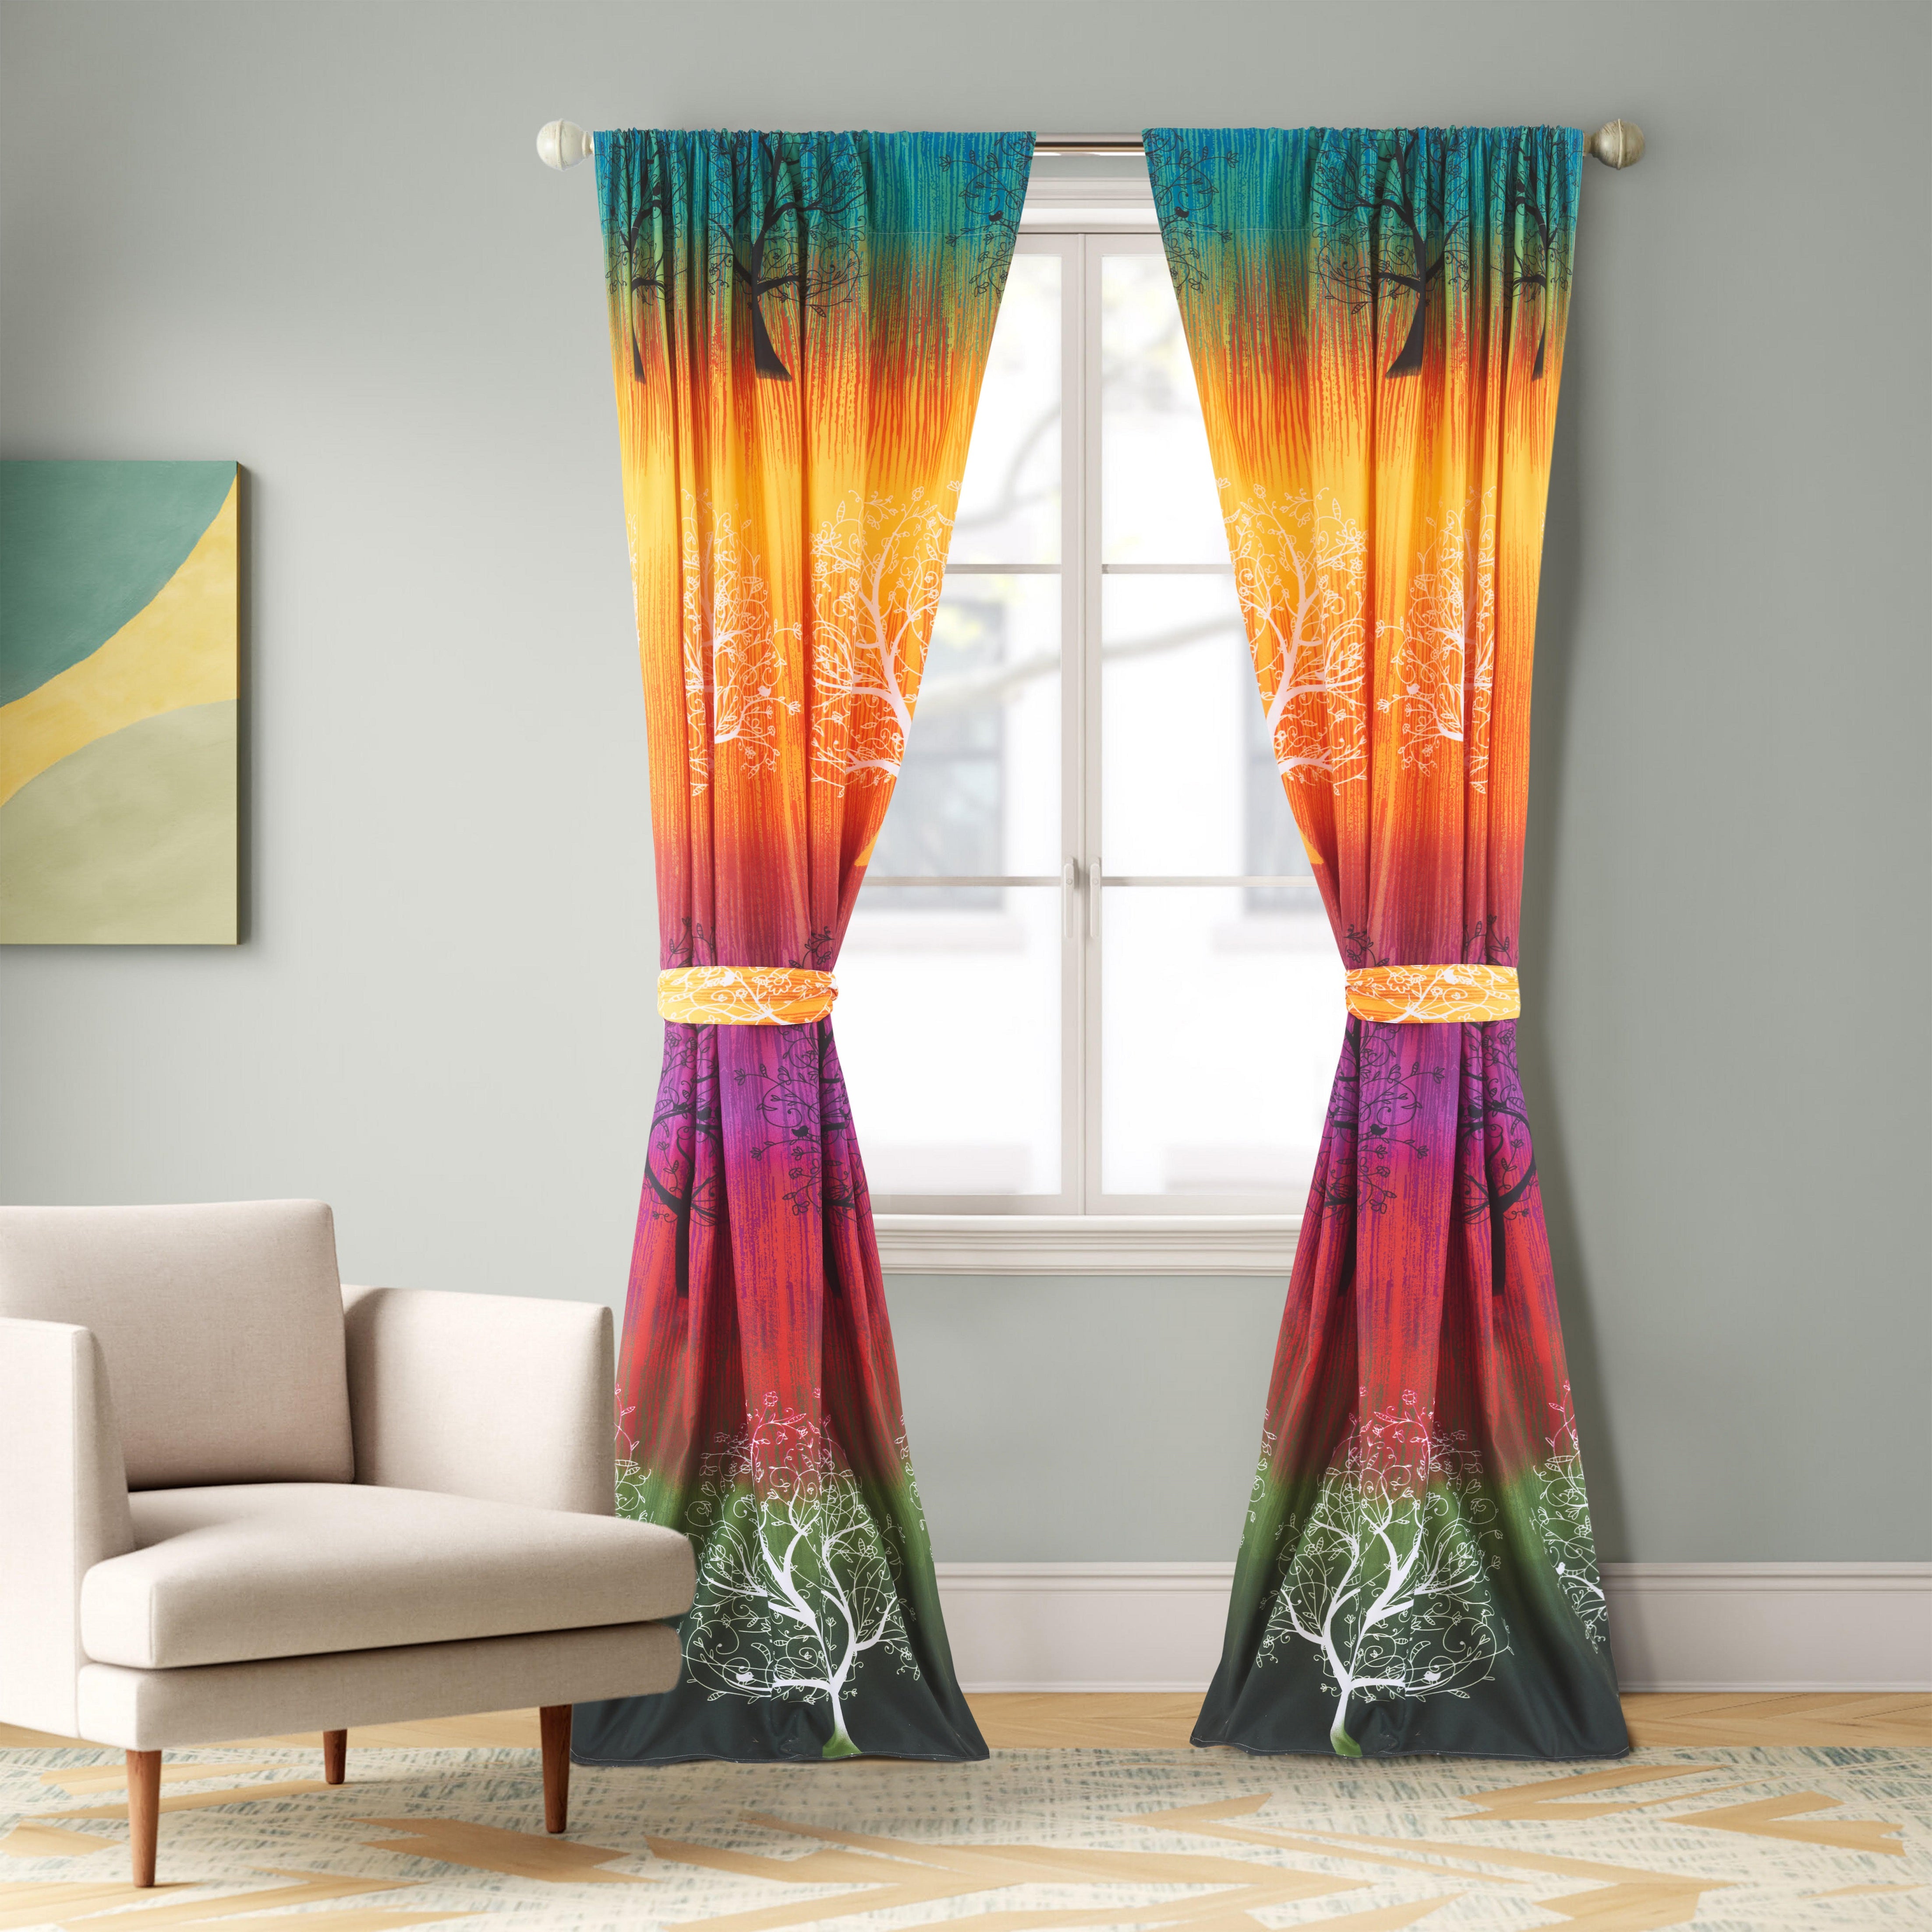 Rainbow Tree Curtain Panel Set: Two Panels and Two Tiebacks, 84-Inch Long